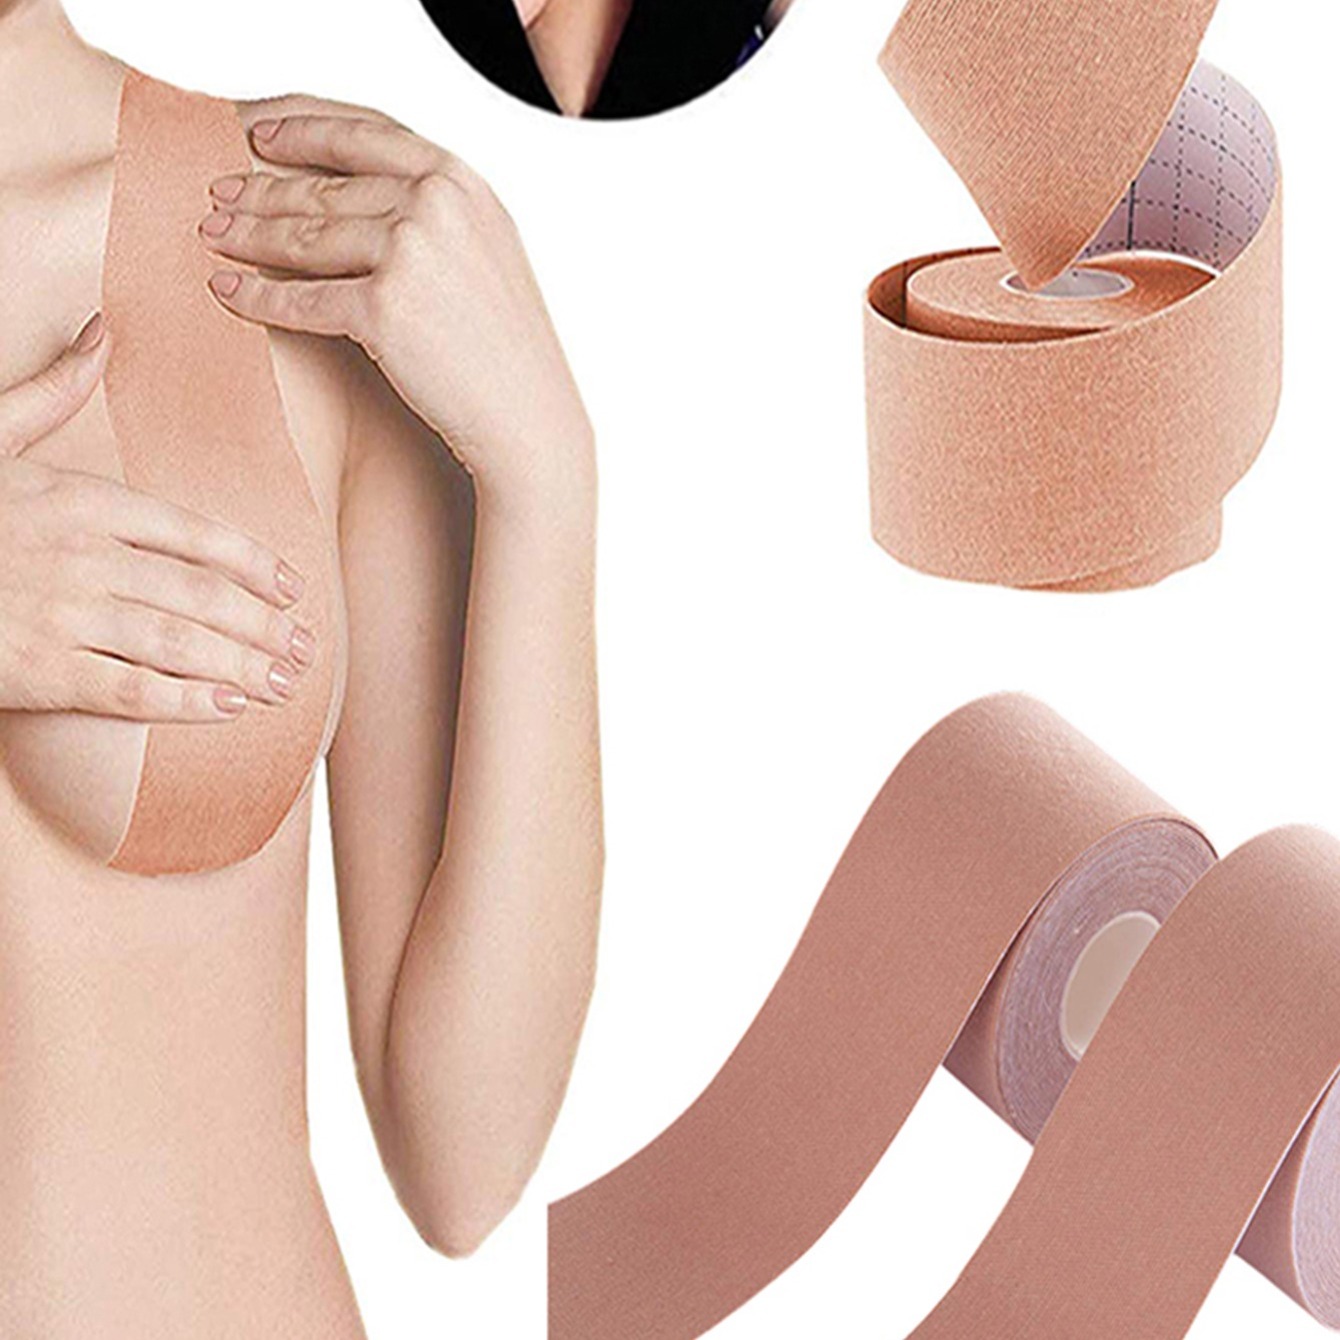 Adhesive Invisible Lifting Nubra  Bra tape, Invisible bra, Strapless  backless bra